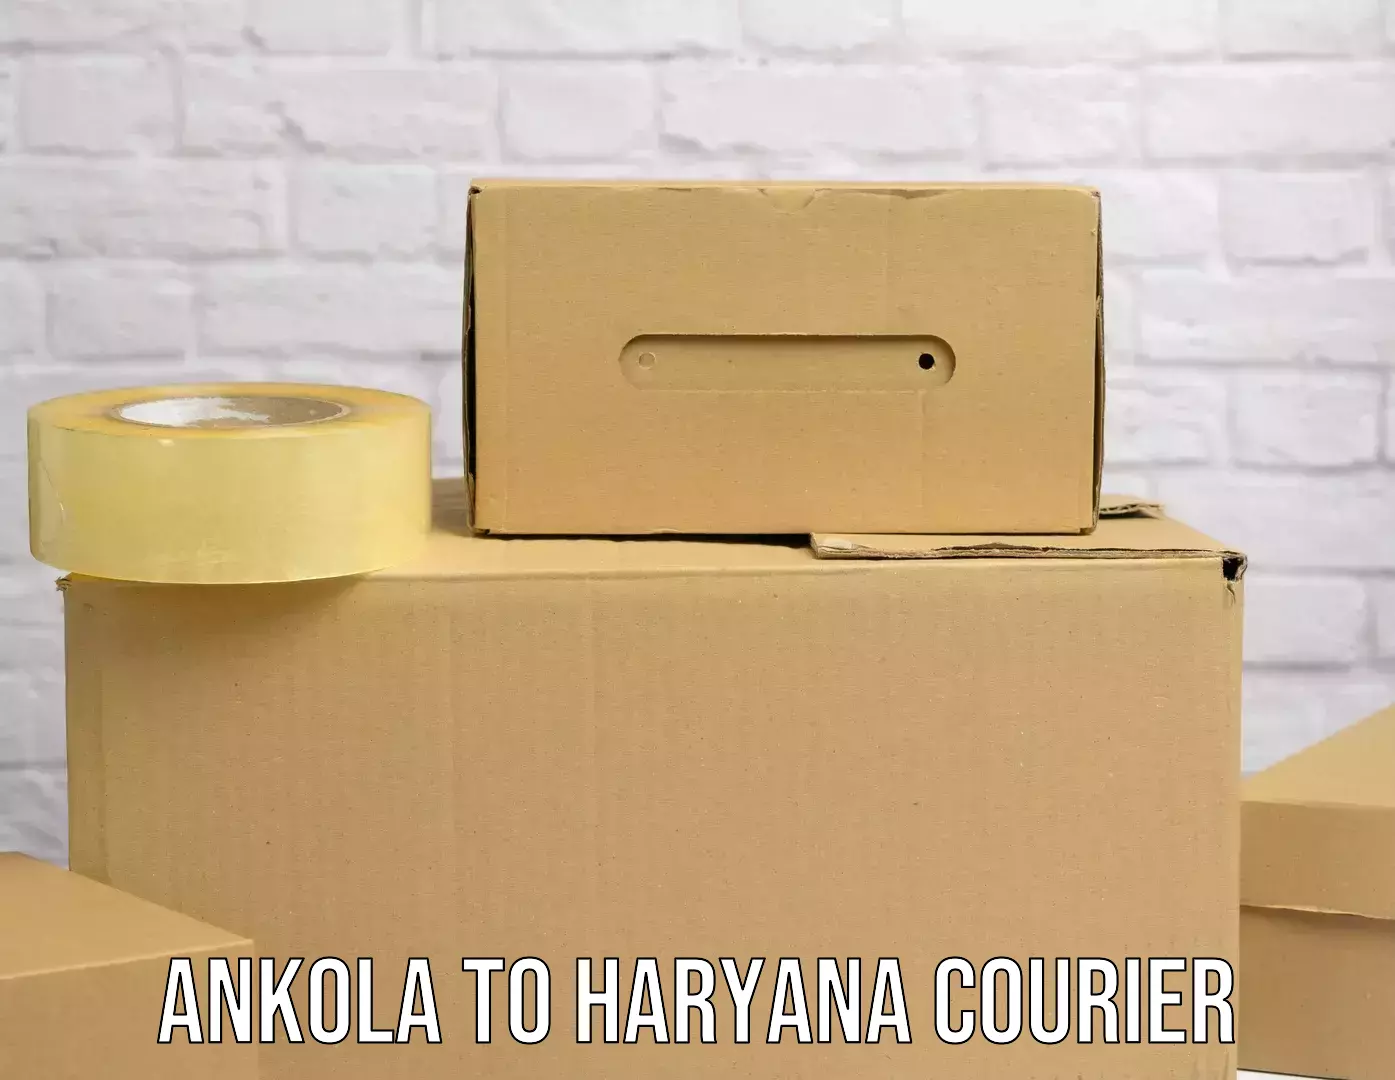 User-friendly delivery service Ankola to Chirya